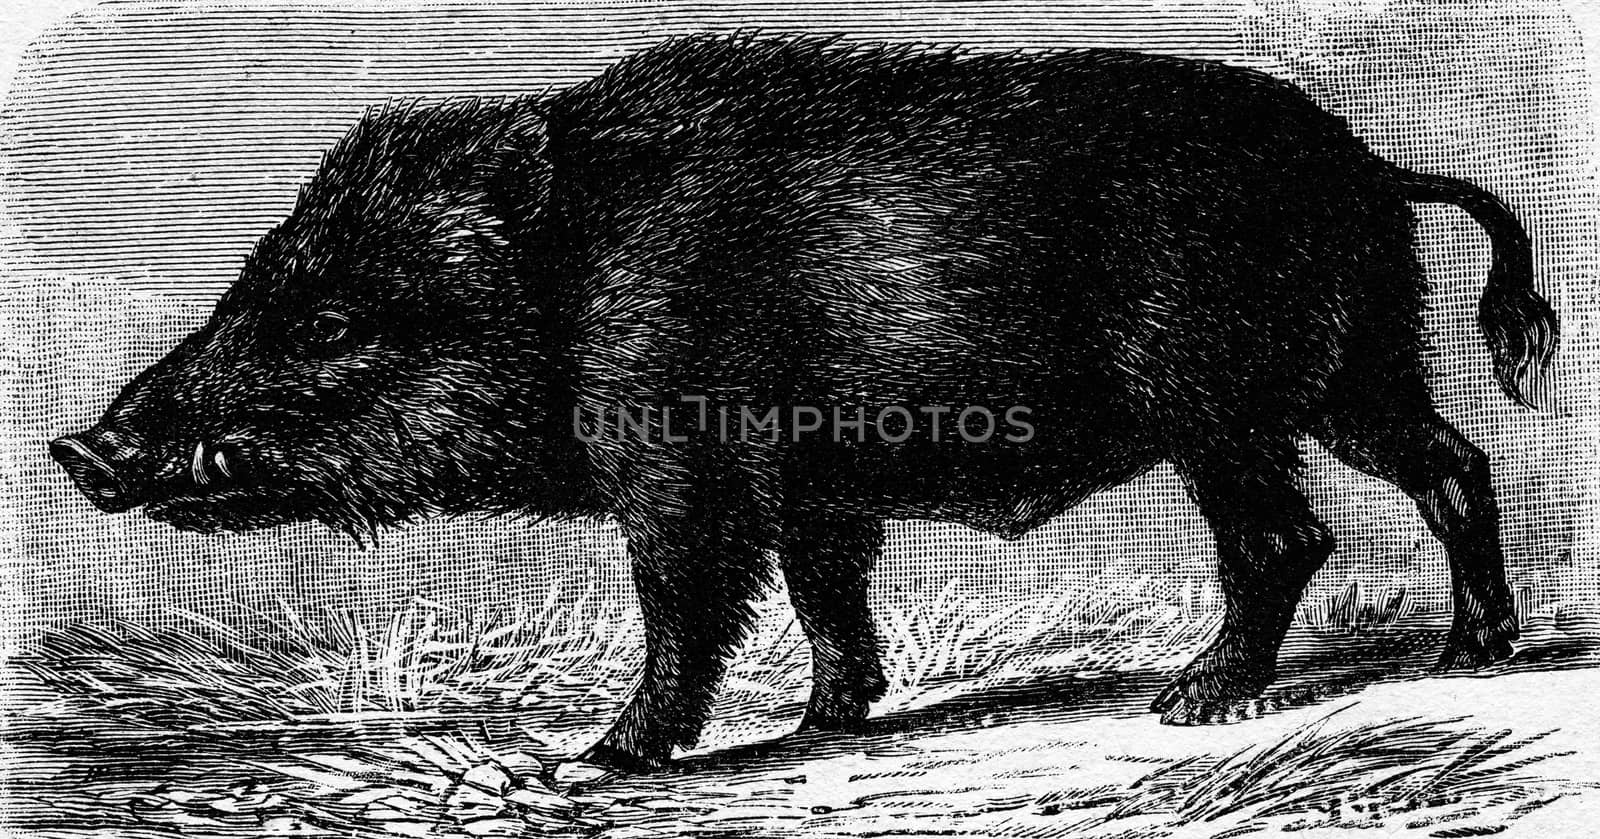 Boar, vintage engraved illustration. La Vie dans la nature, 1890.
